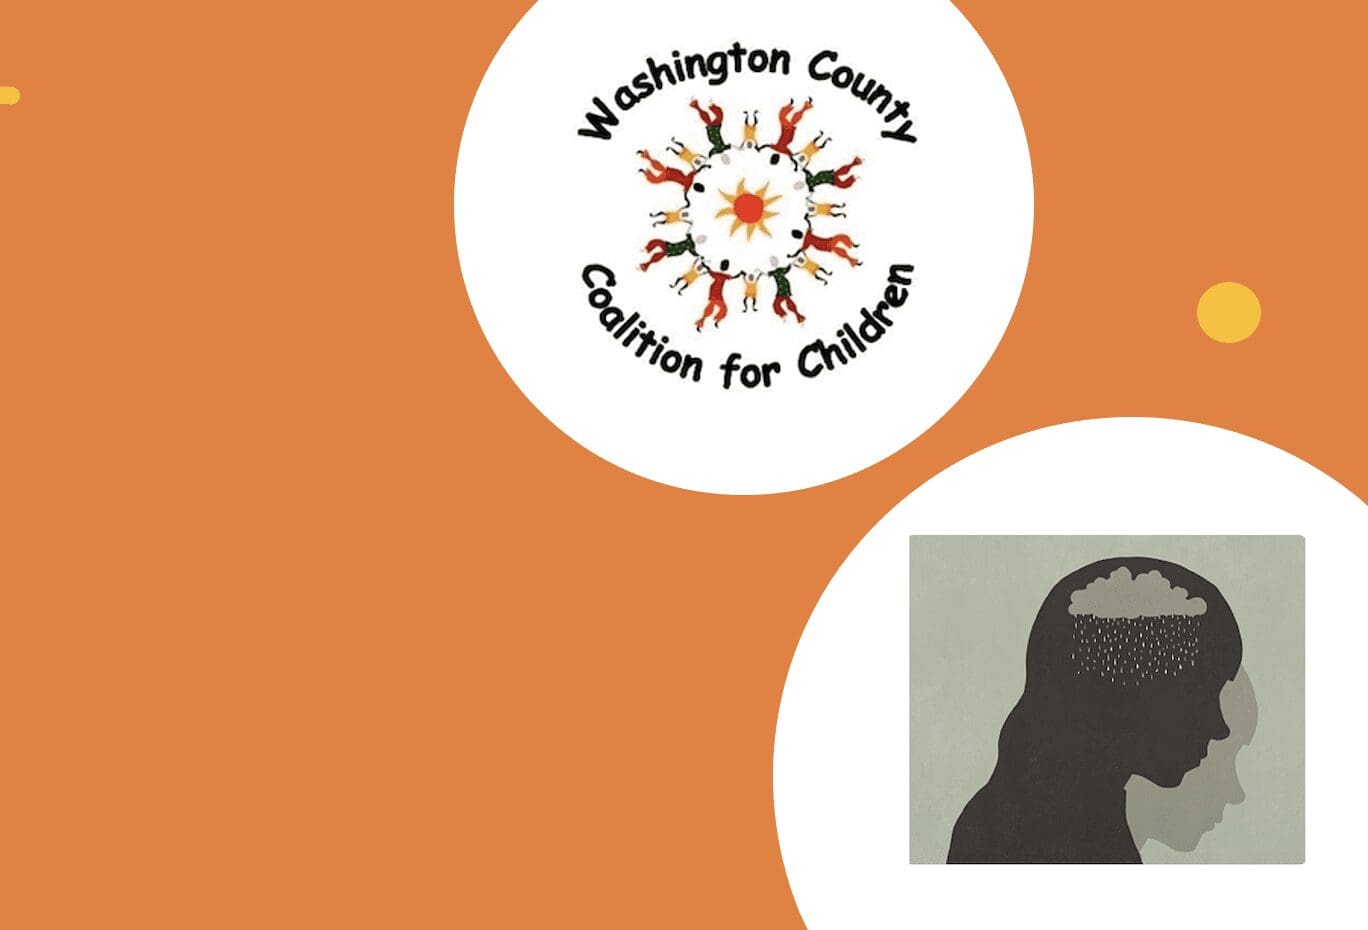 The logo for the washington county center for children.